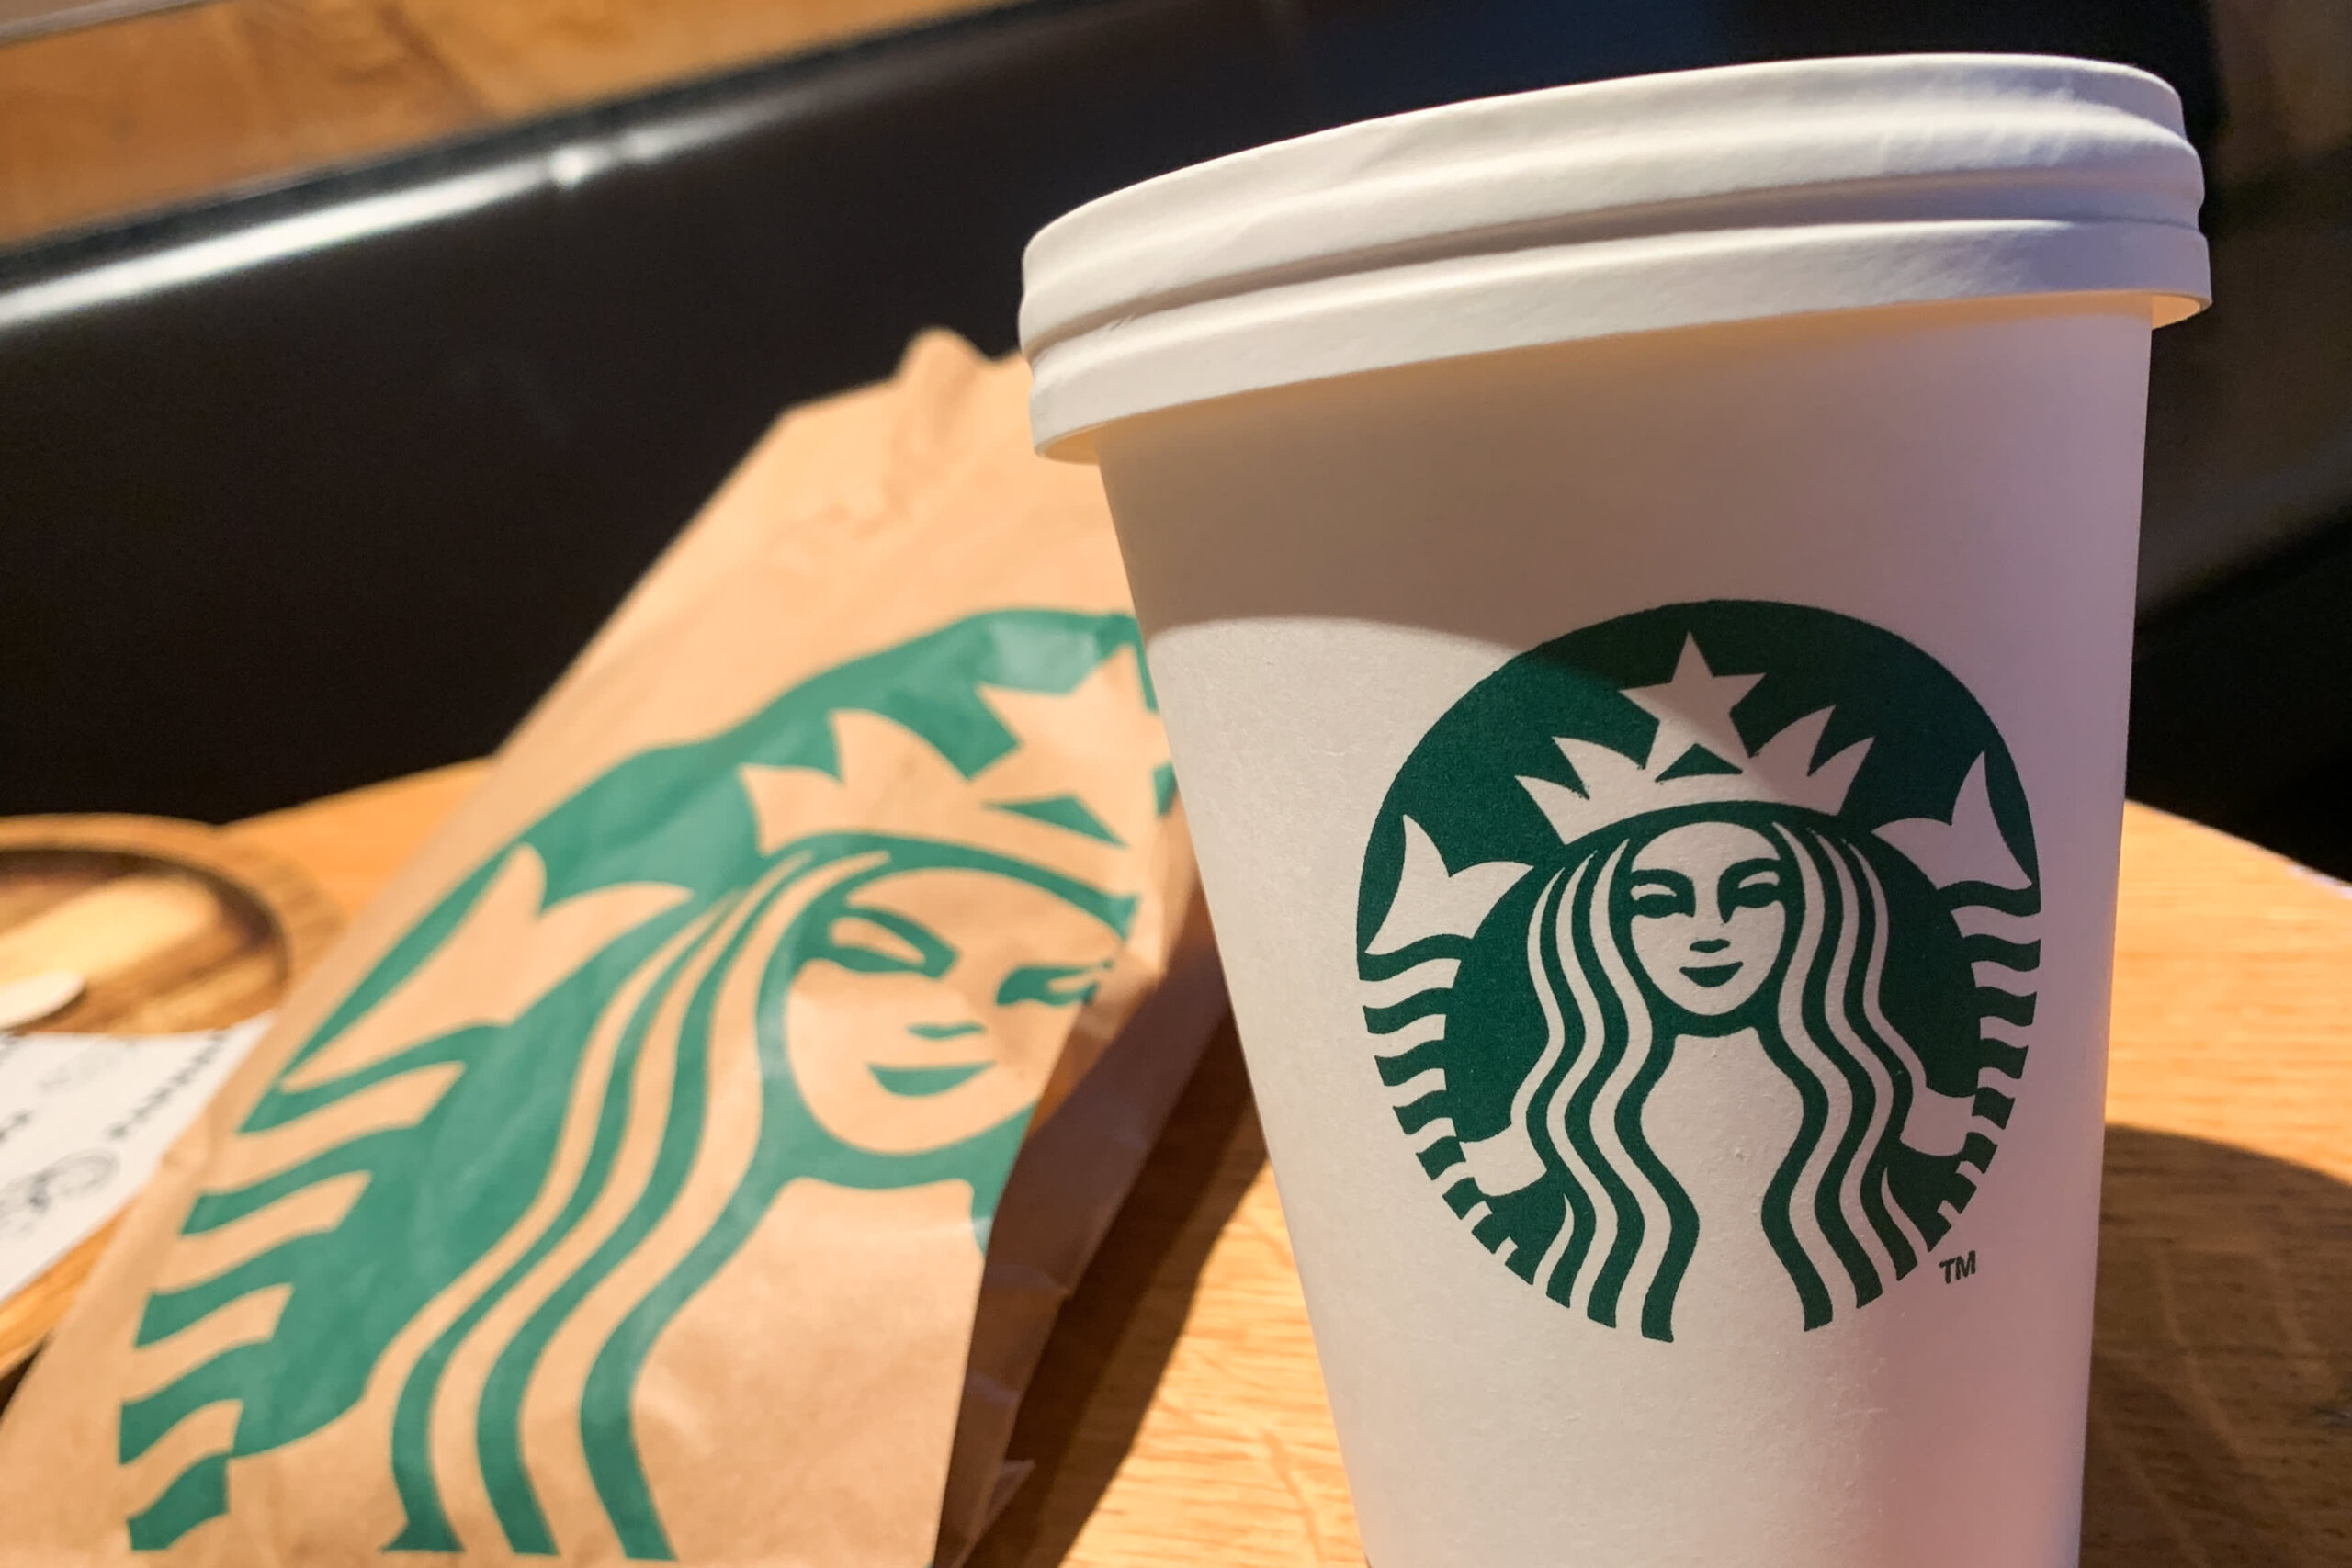 Has Starbucks Really Renamed Itself to Vista Coffee?